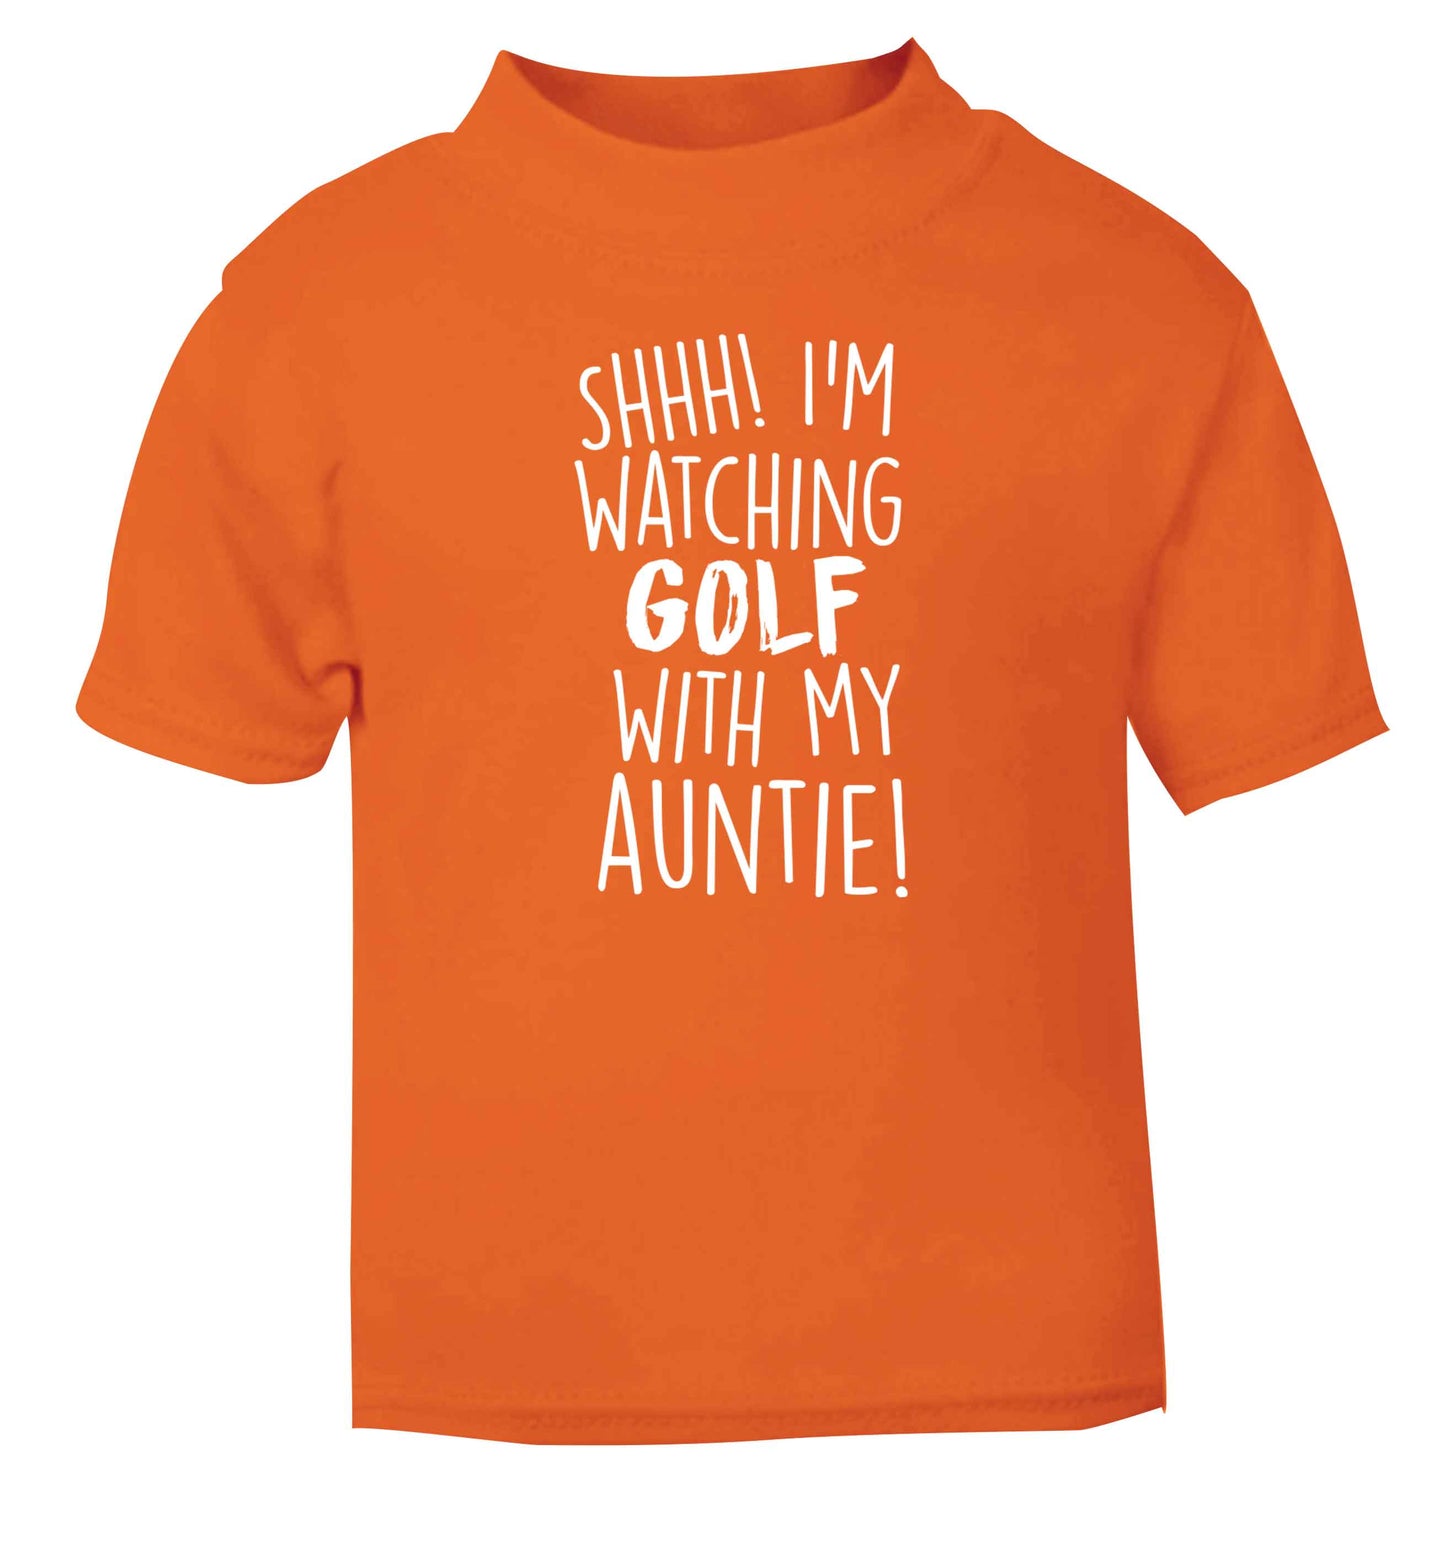 Shh I'm watching golf with my auntie orange Baby Toddler Tshirt 2 Years